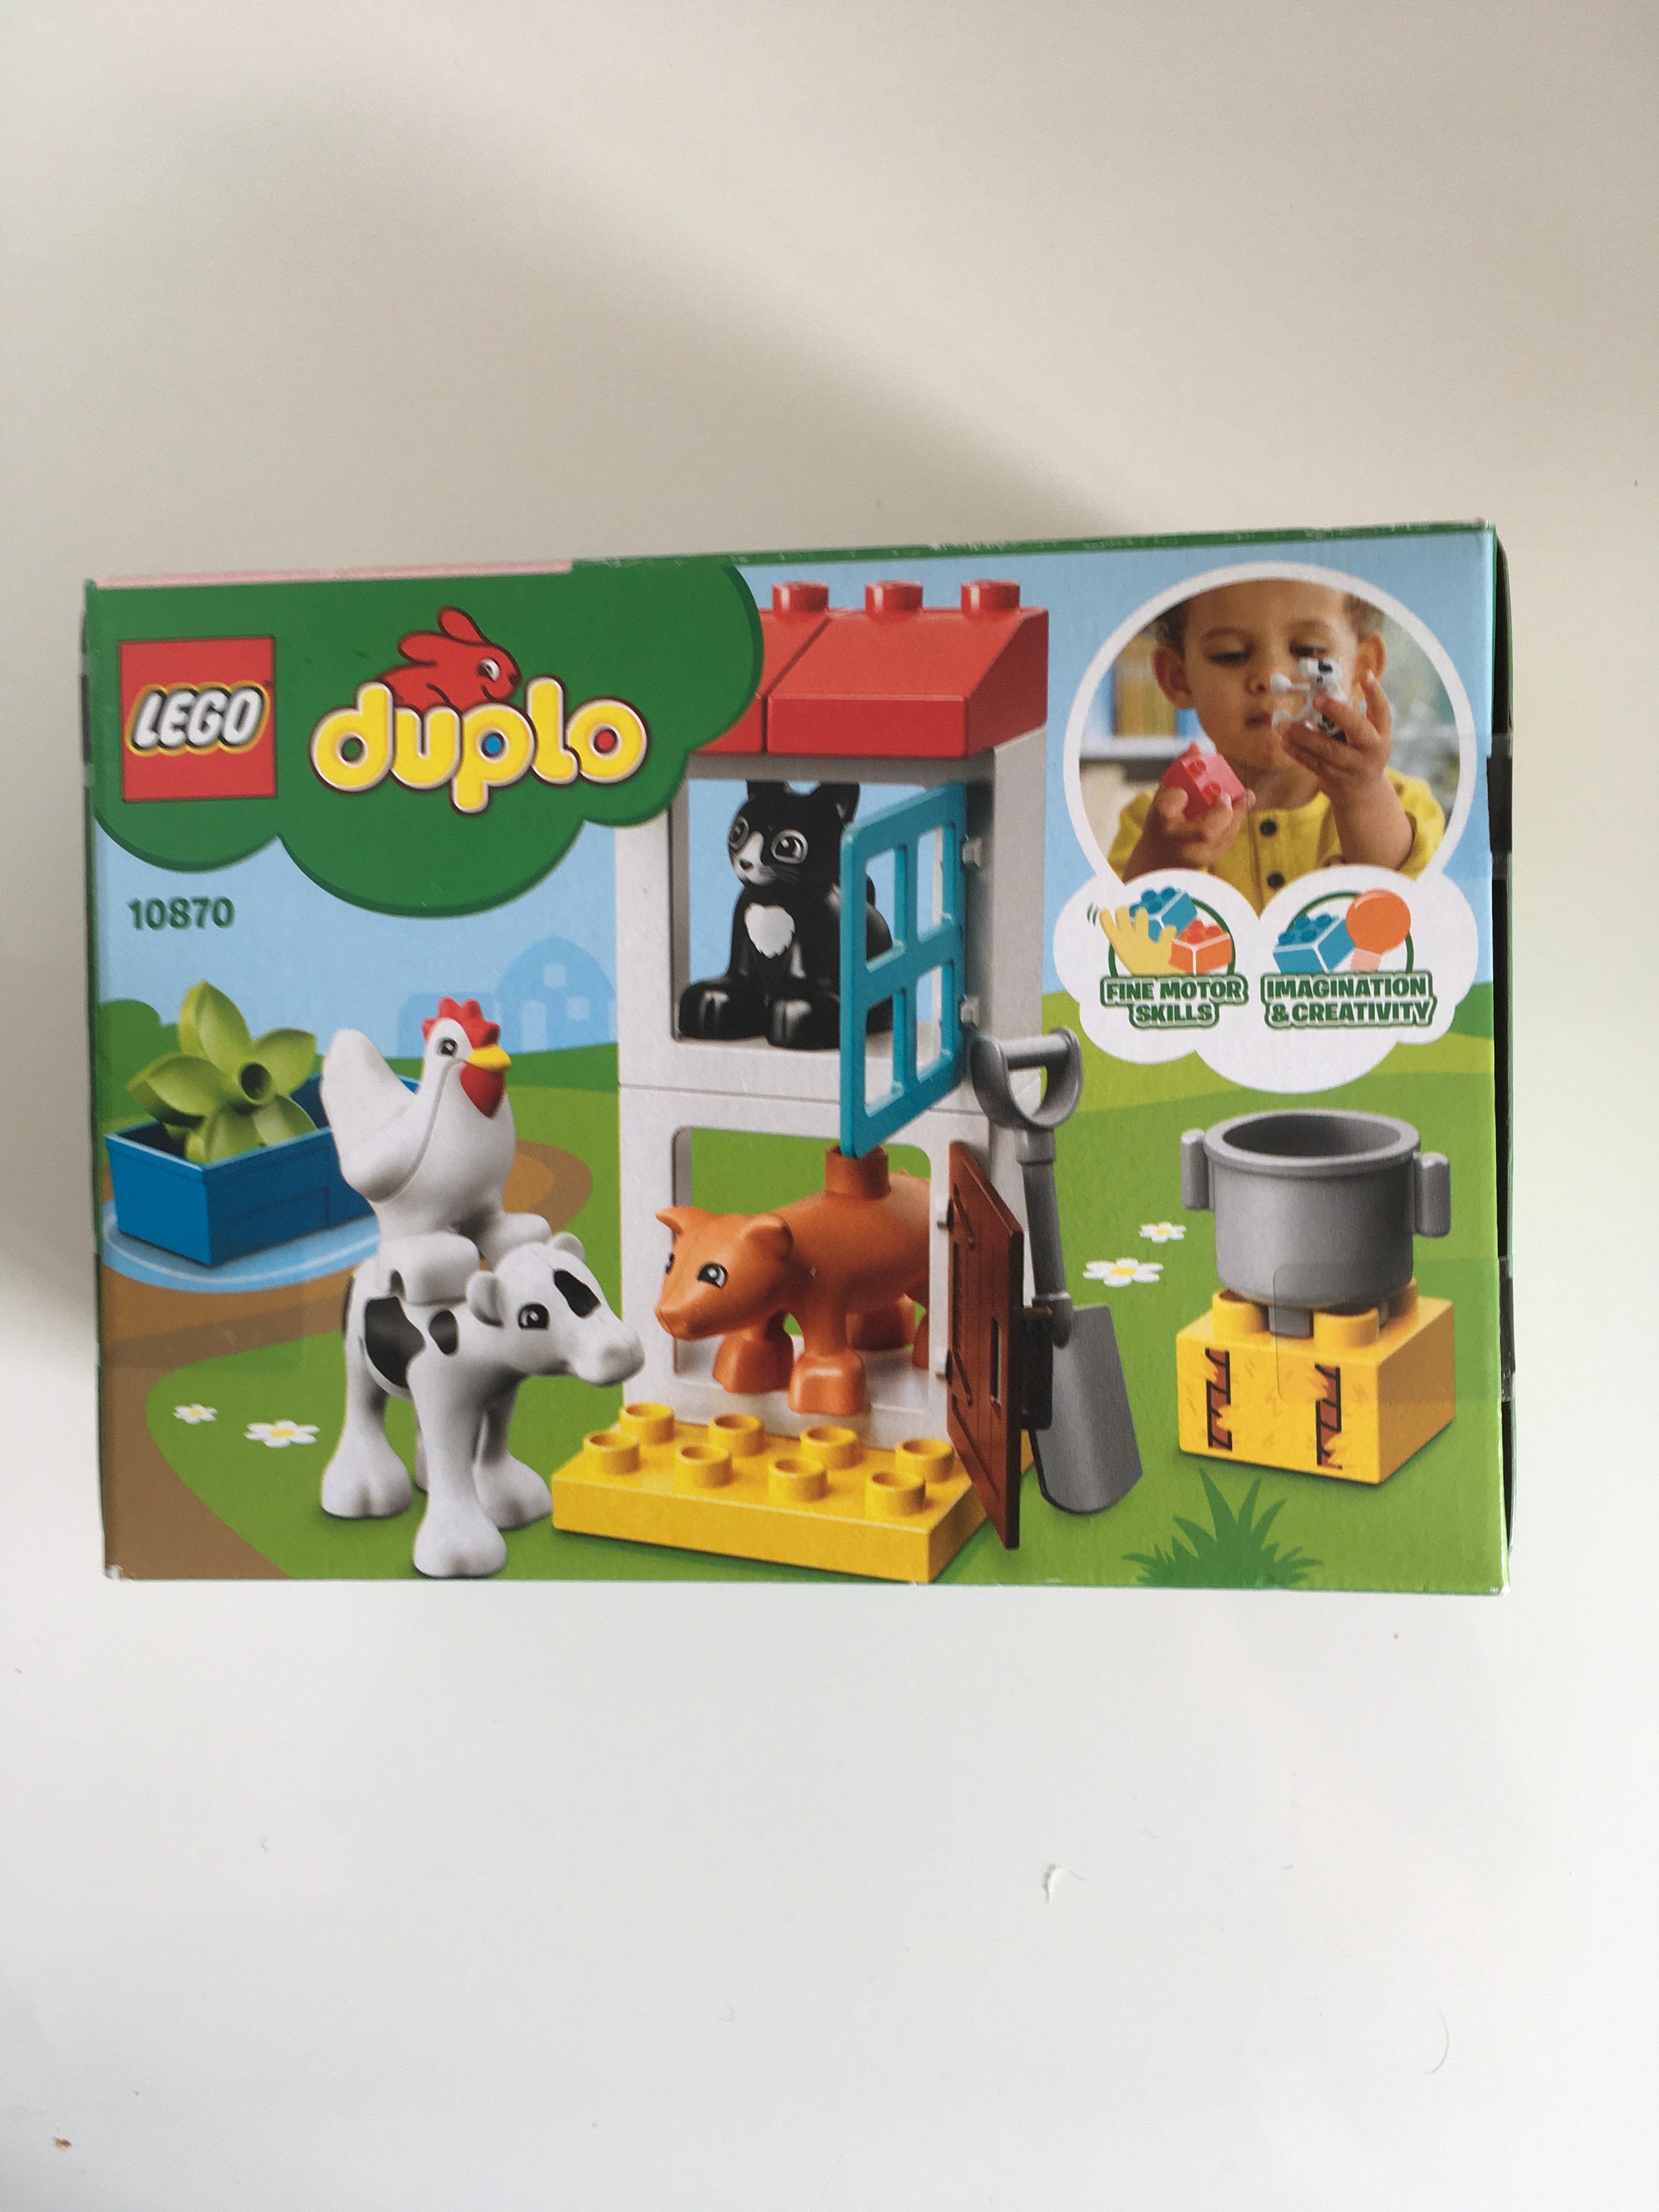 Duplo Lego Set 10870 Farm Animals 2018 New in the Original Box Not Open 